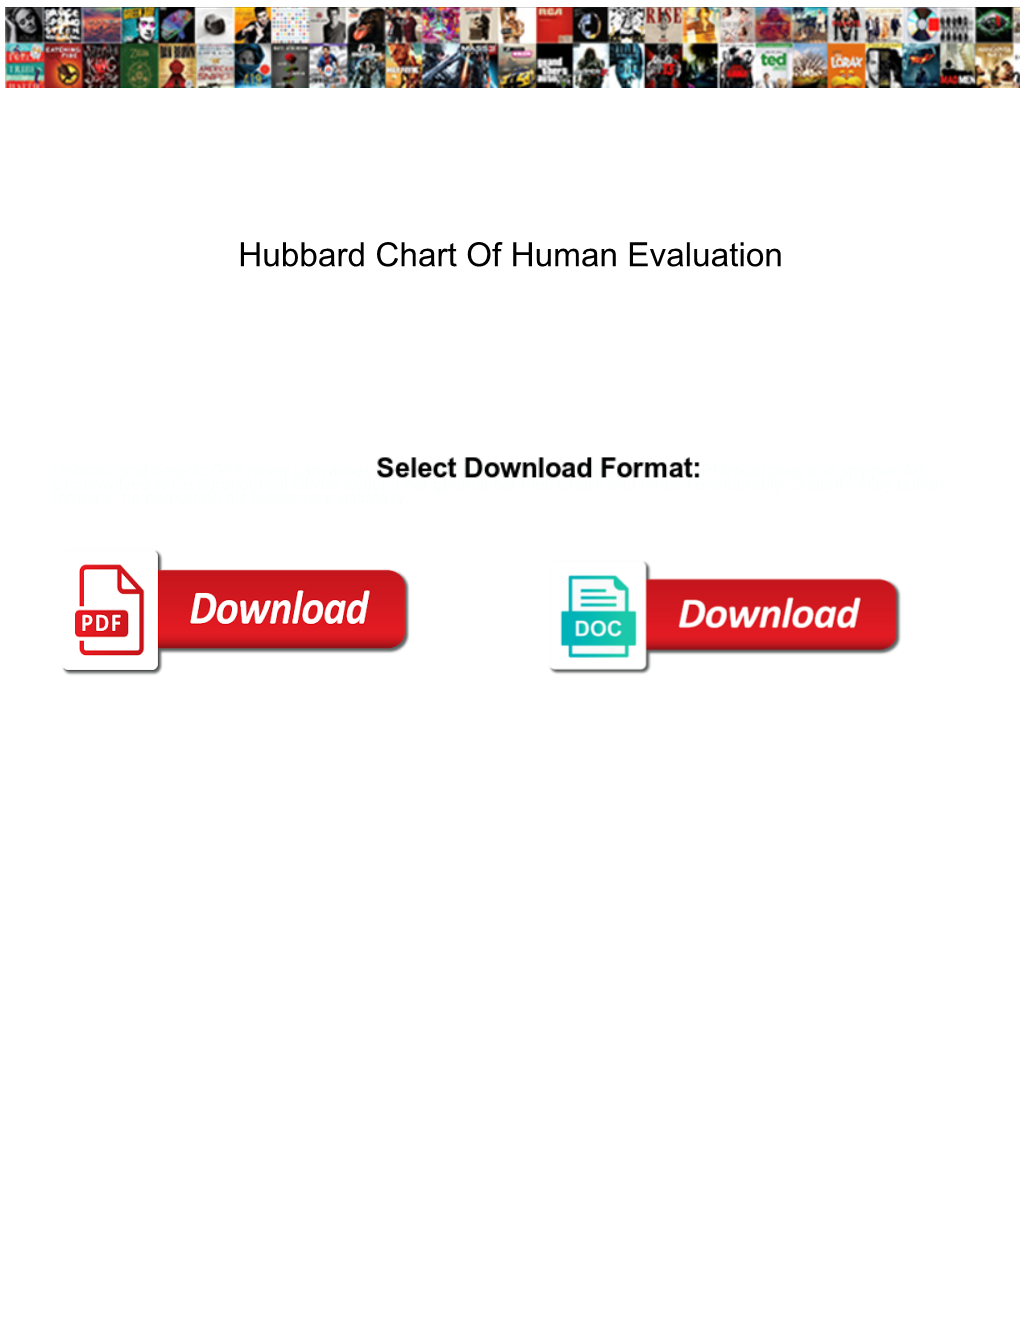 Hubbard Chart of Human Evaluation